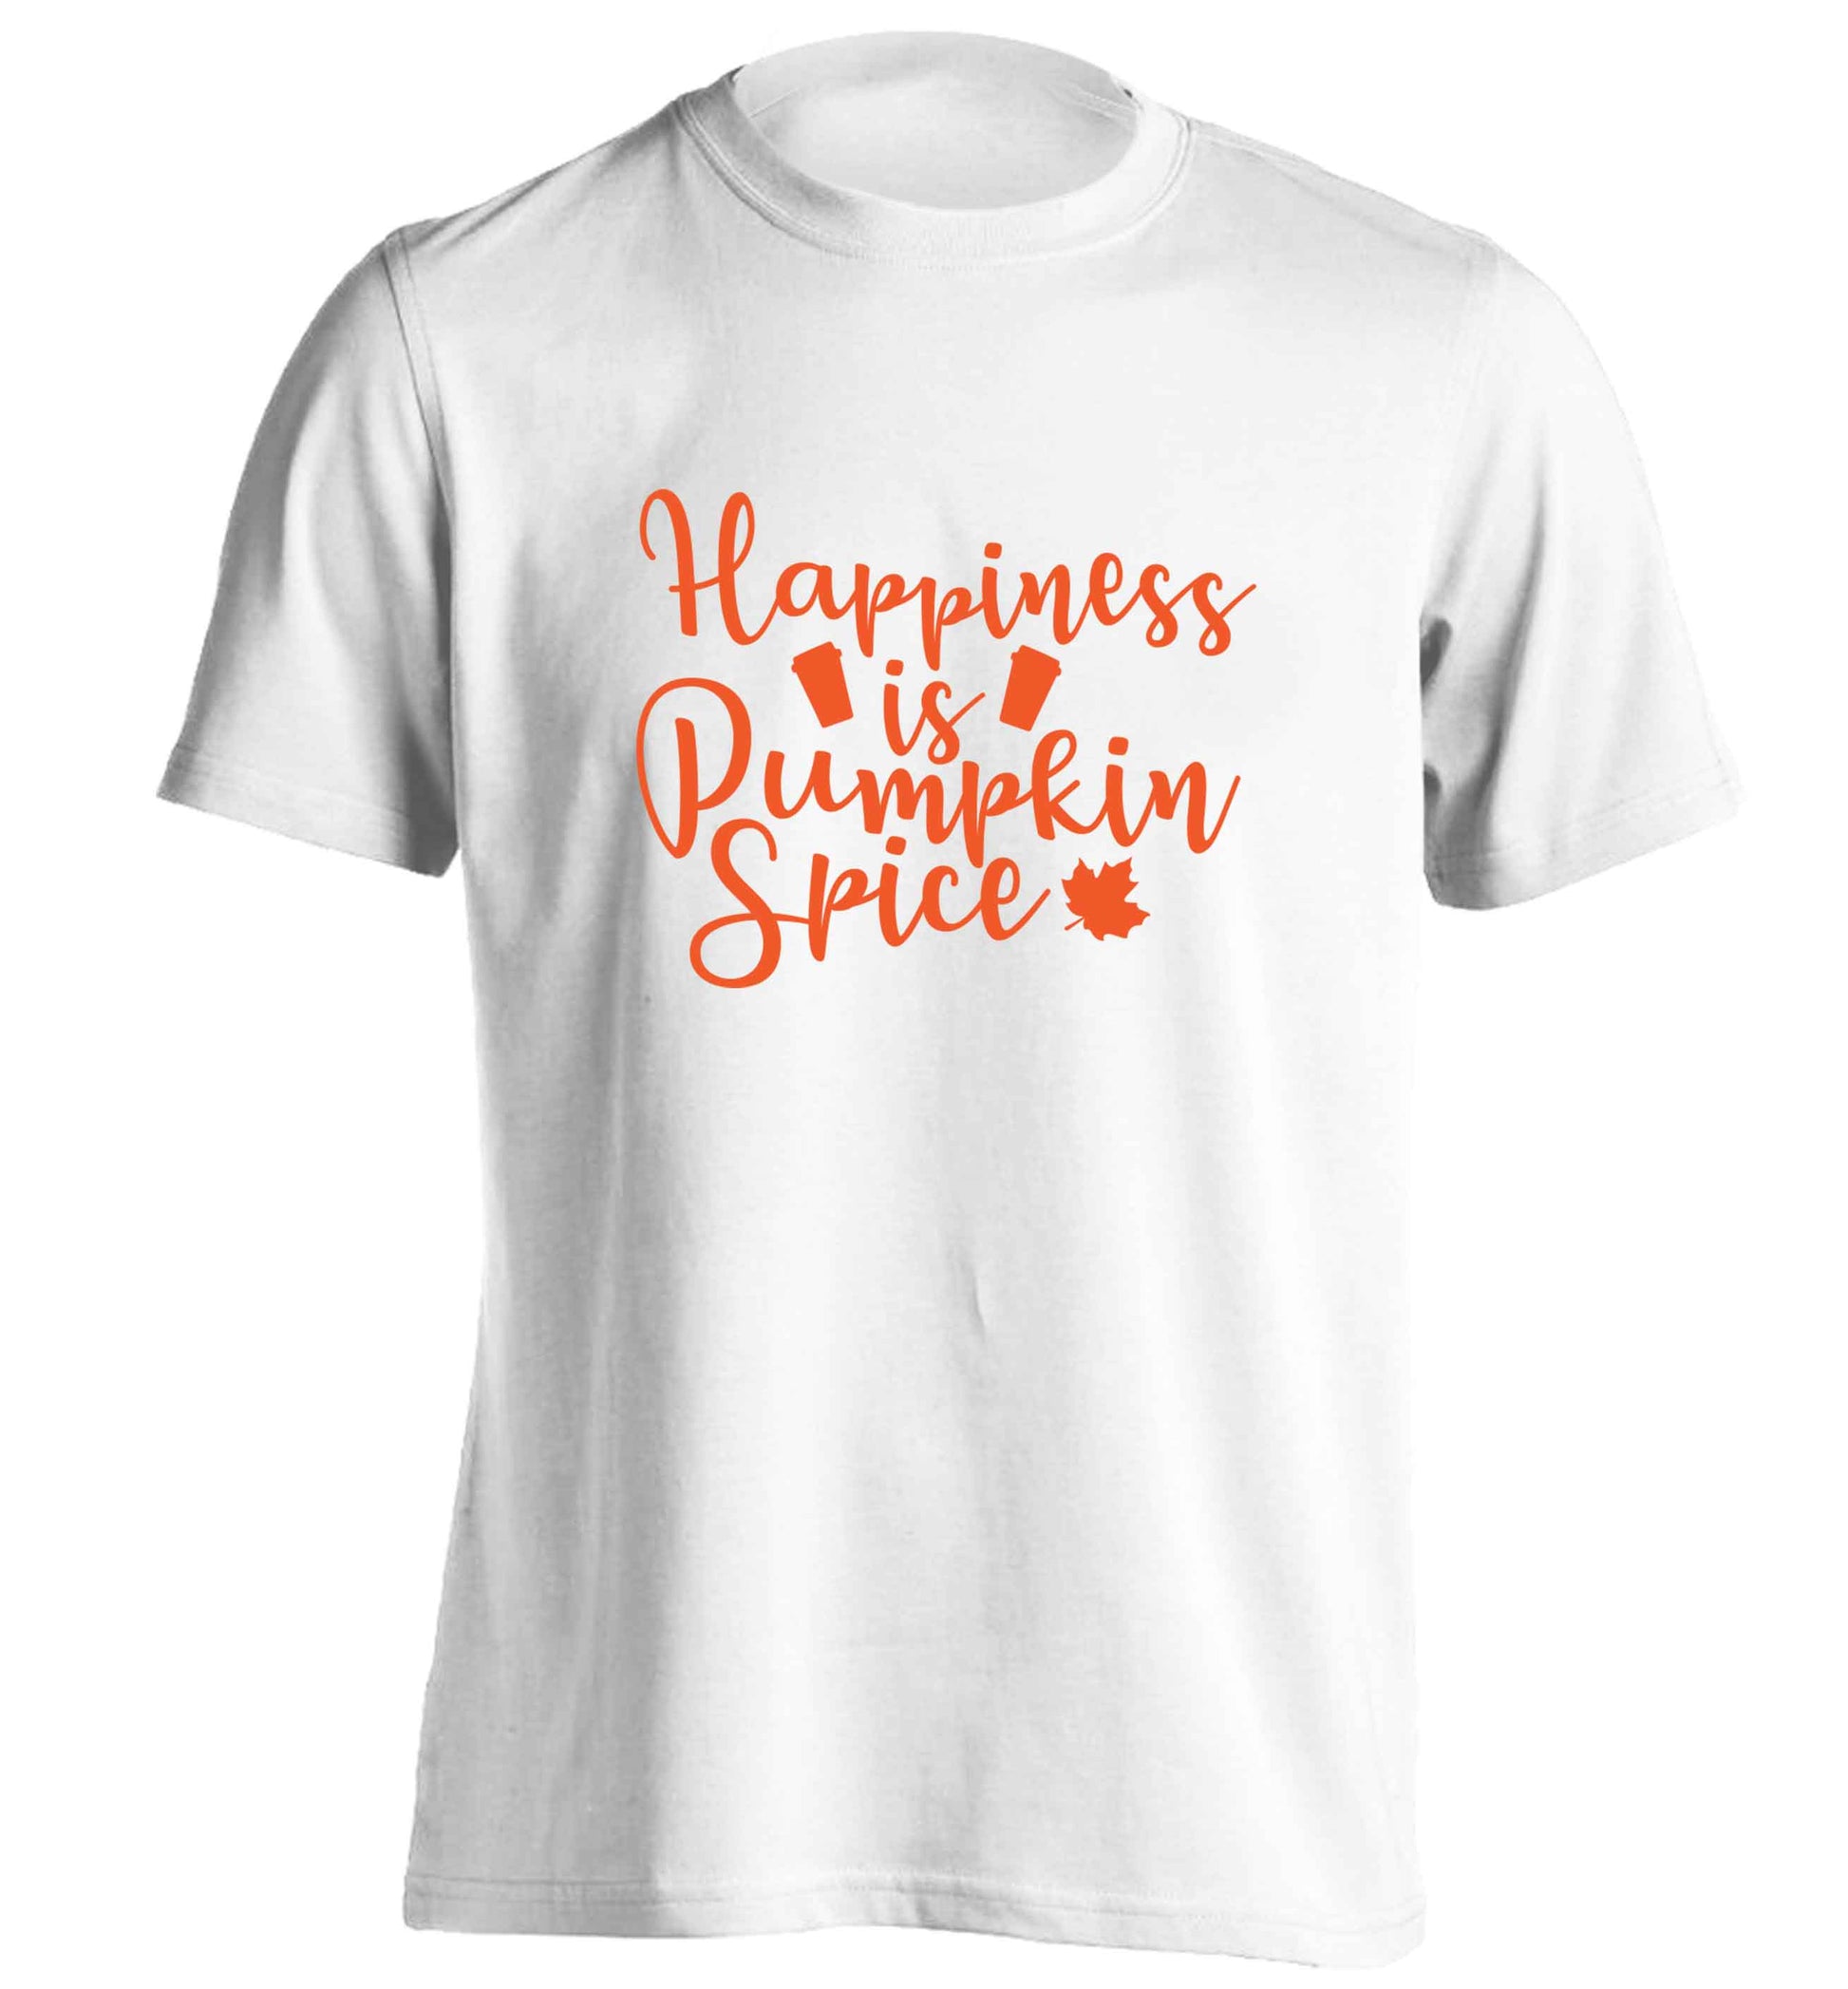 Happiness Pumpkin Spice adults unisex white Tshirt 2XL